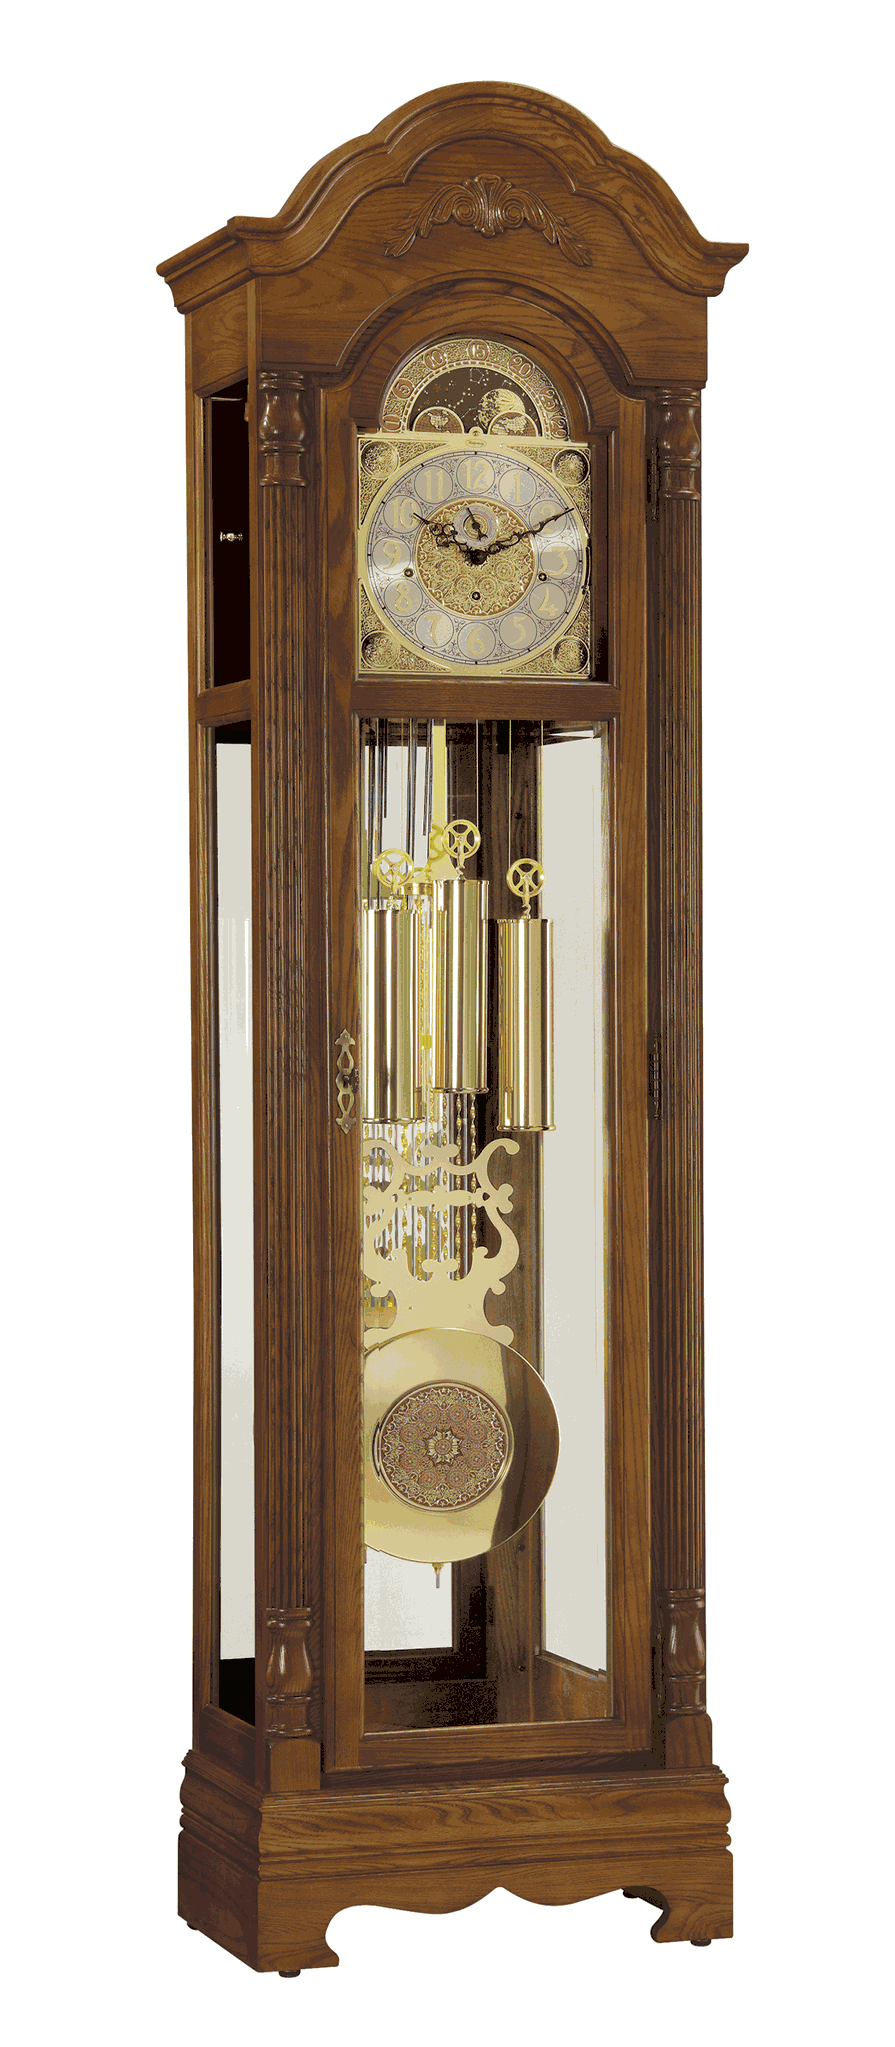 Kingsley Grandfather Clock by Ridgeway